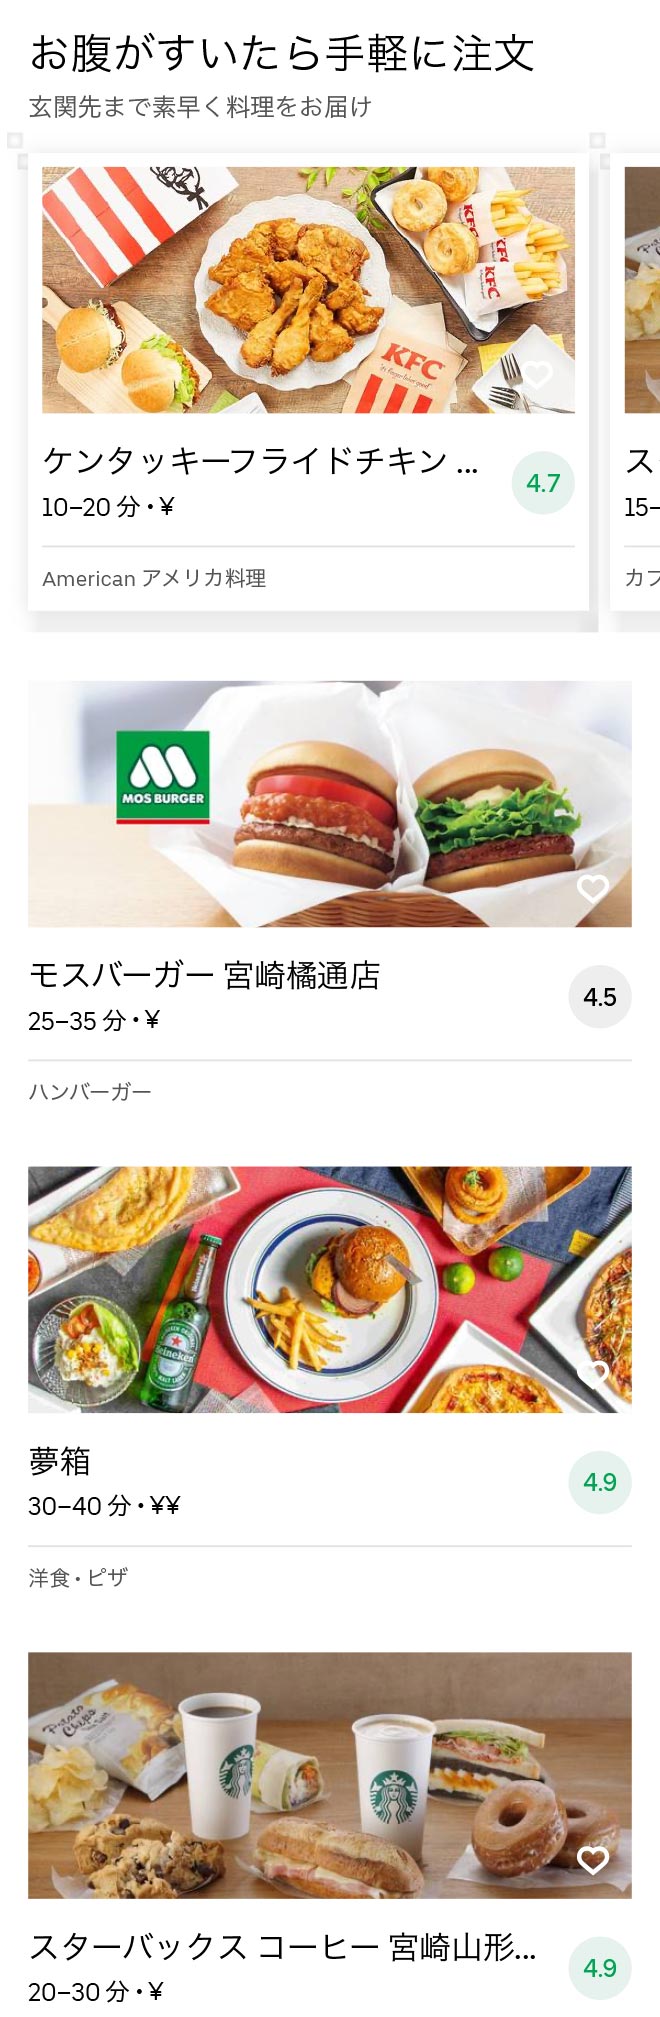 Miyazaki menu 2009 2